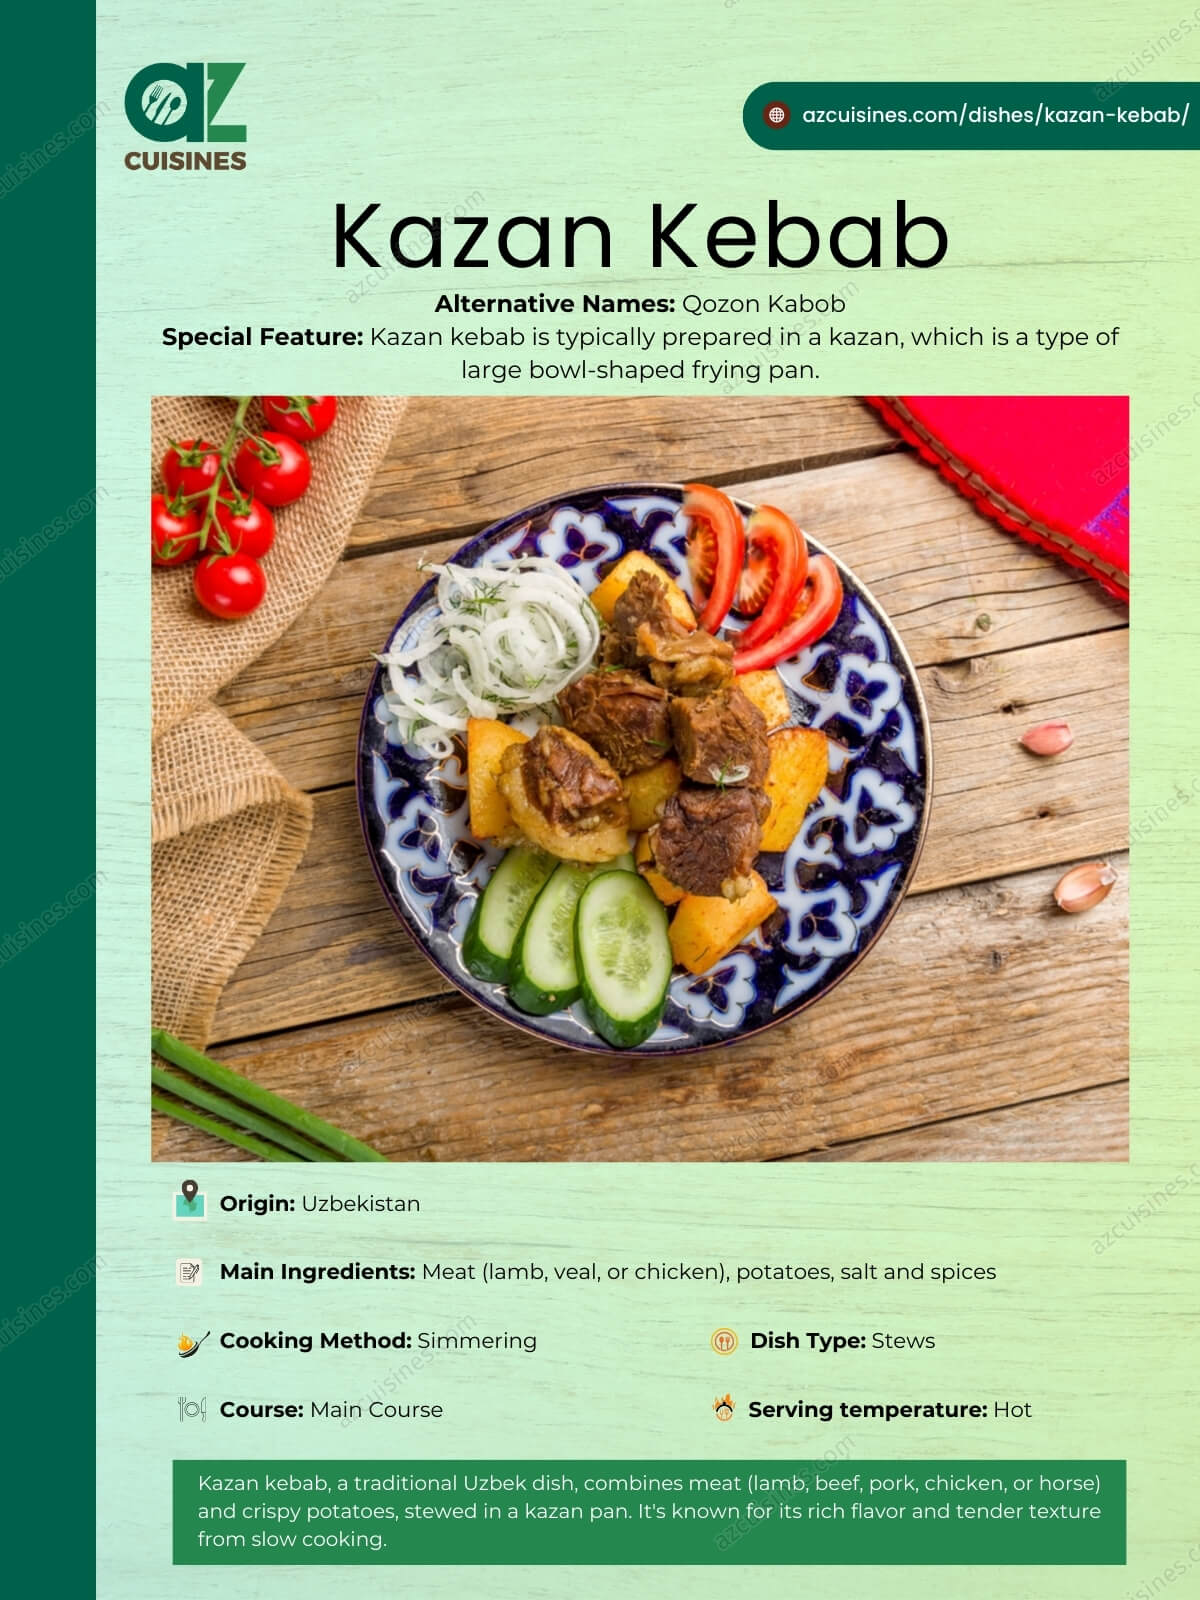 Kazan Kebab Overview